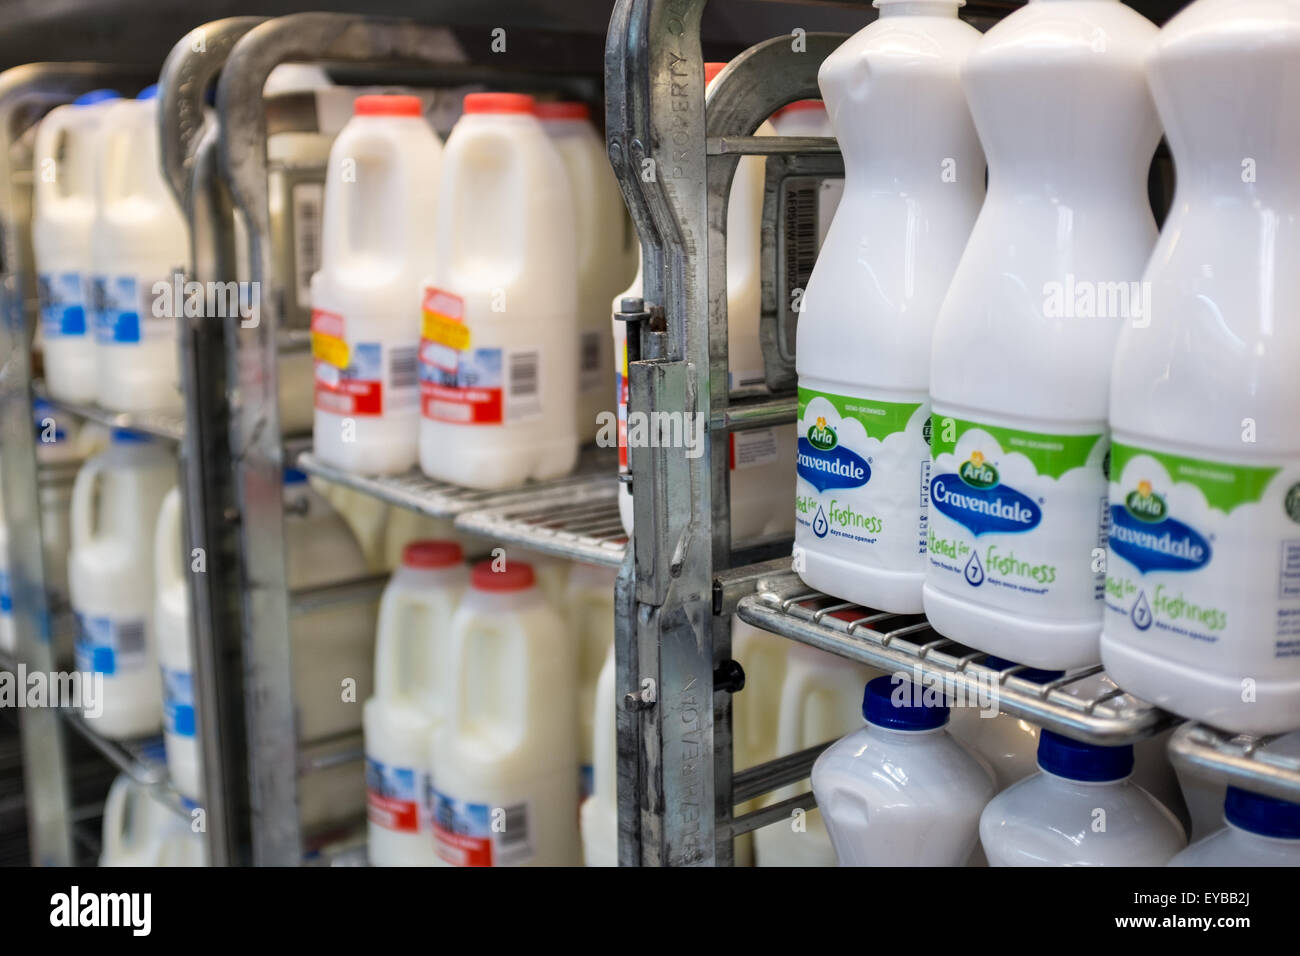 https://c8.alamy.com/comp/EYBB2J/milk-on-display-on-supermarket-refridgerated-shelving-EYBB2J.jpg